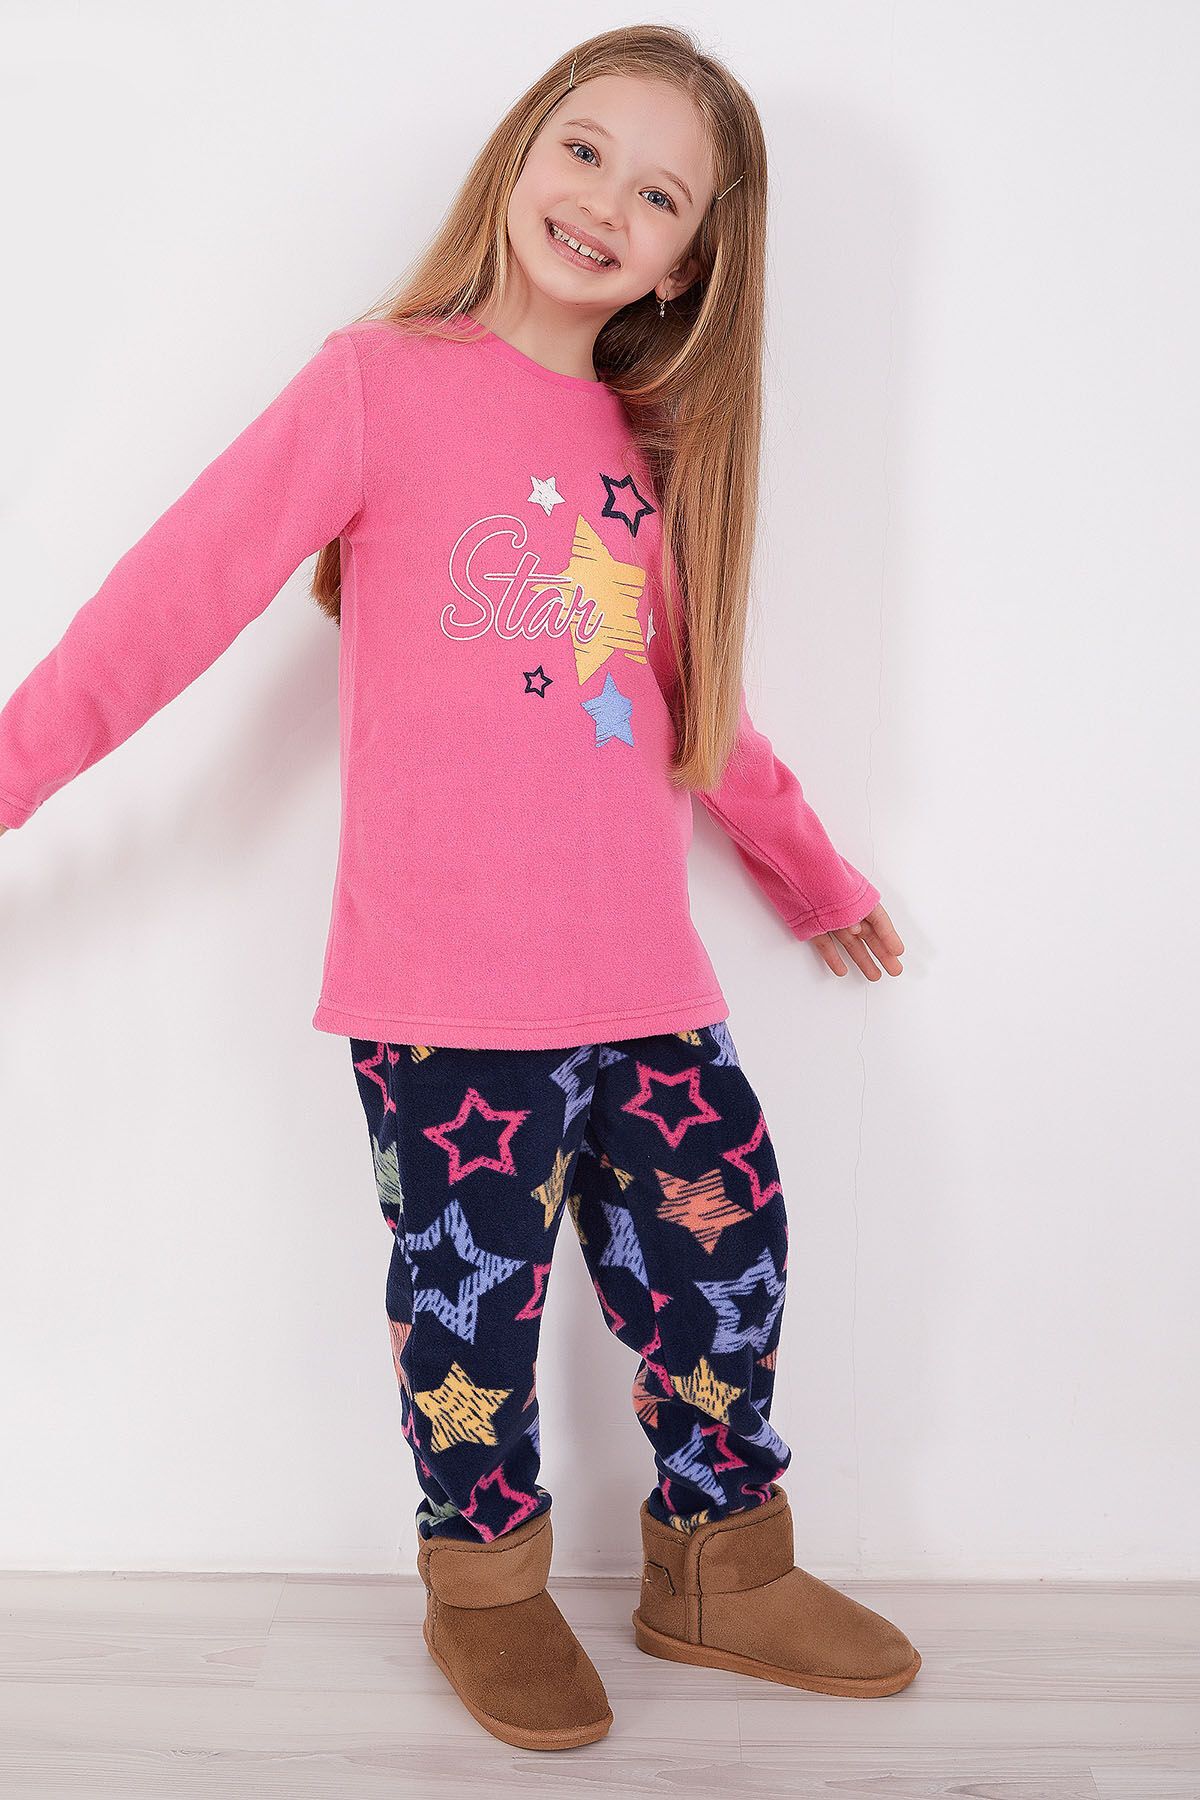 Rolypoly Rolypoly Star Pembe Kız Çocuk Uzun Kol Pijama Takım